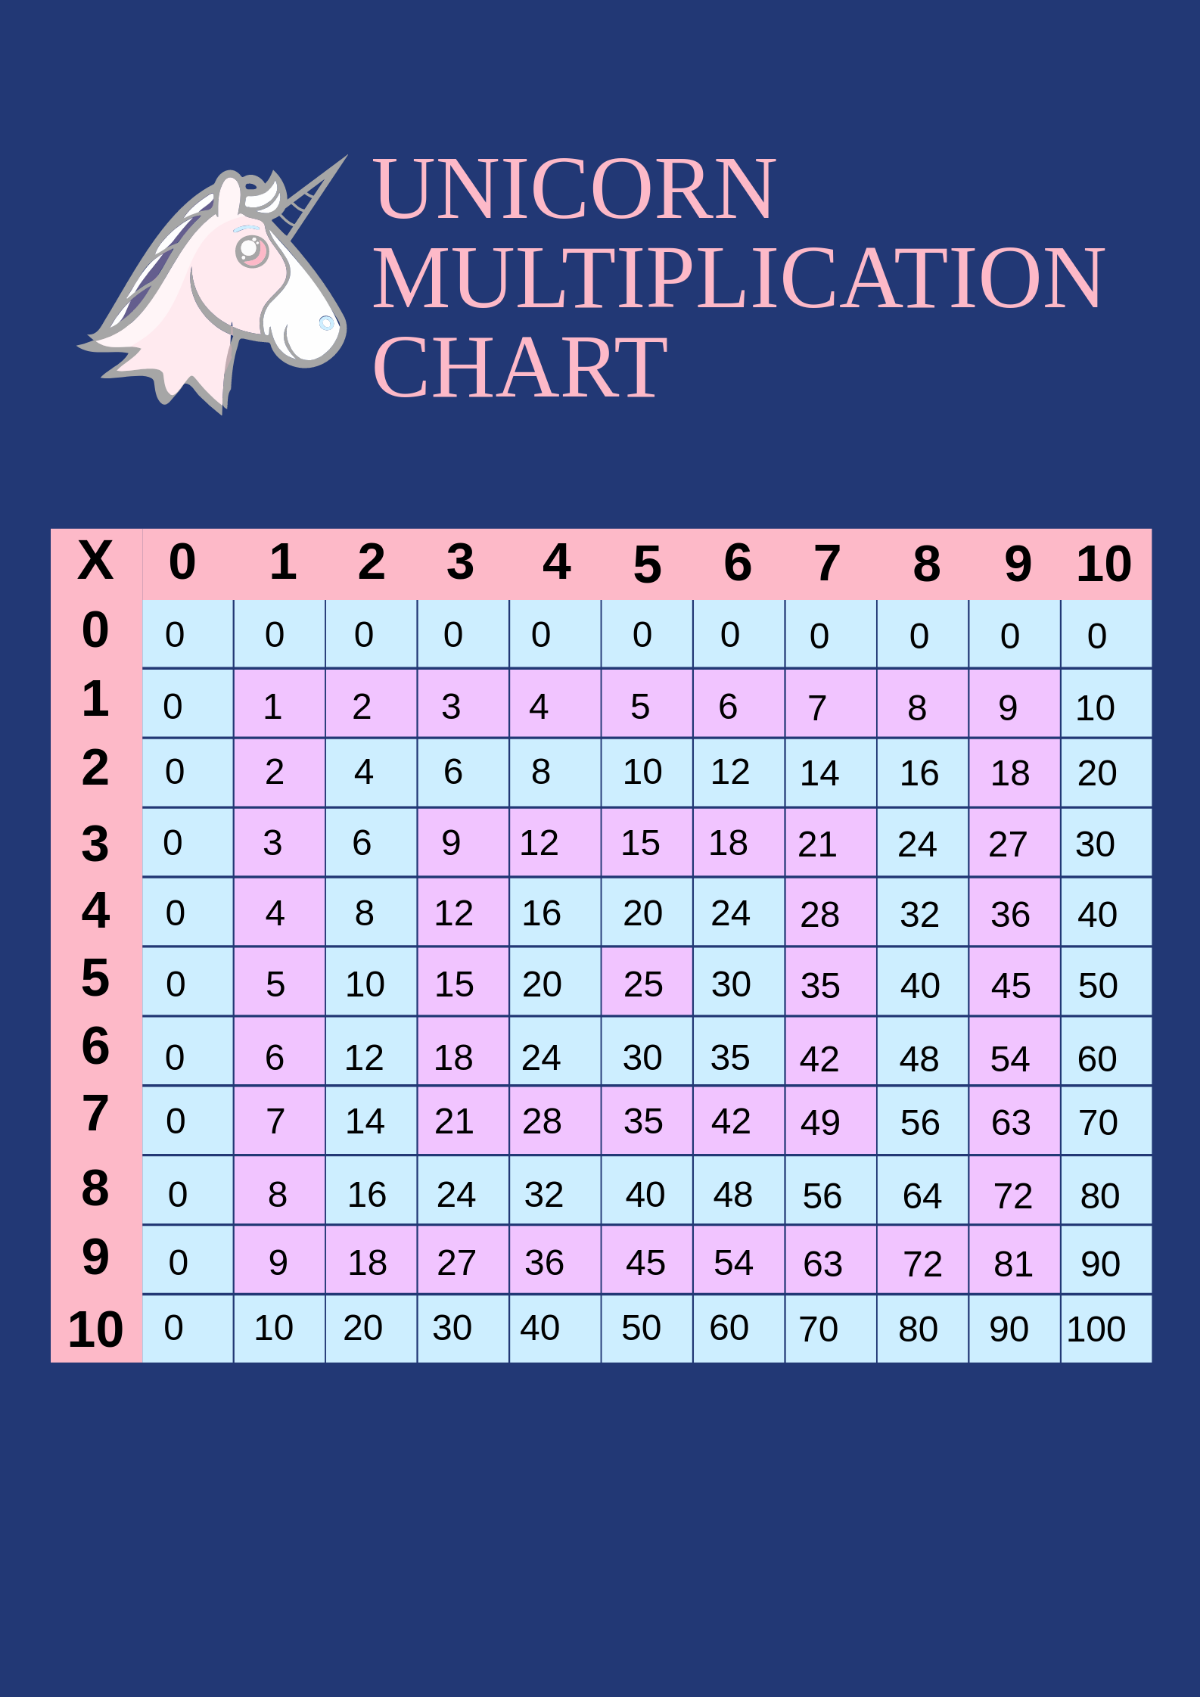 Unicorn Multiplication Chart